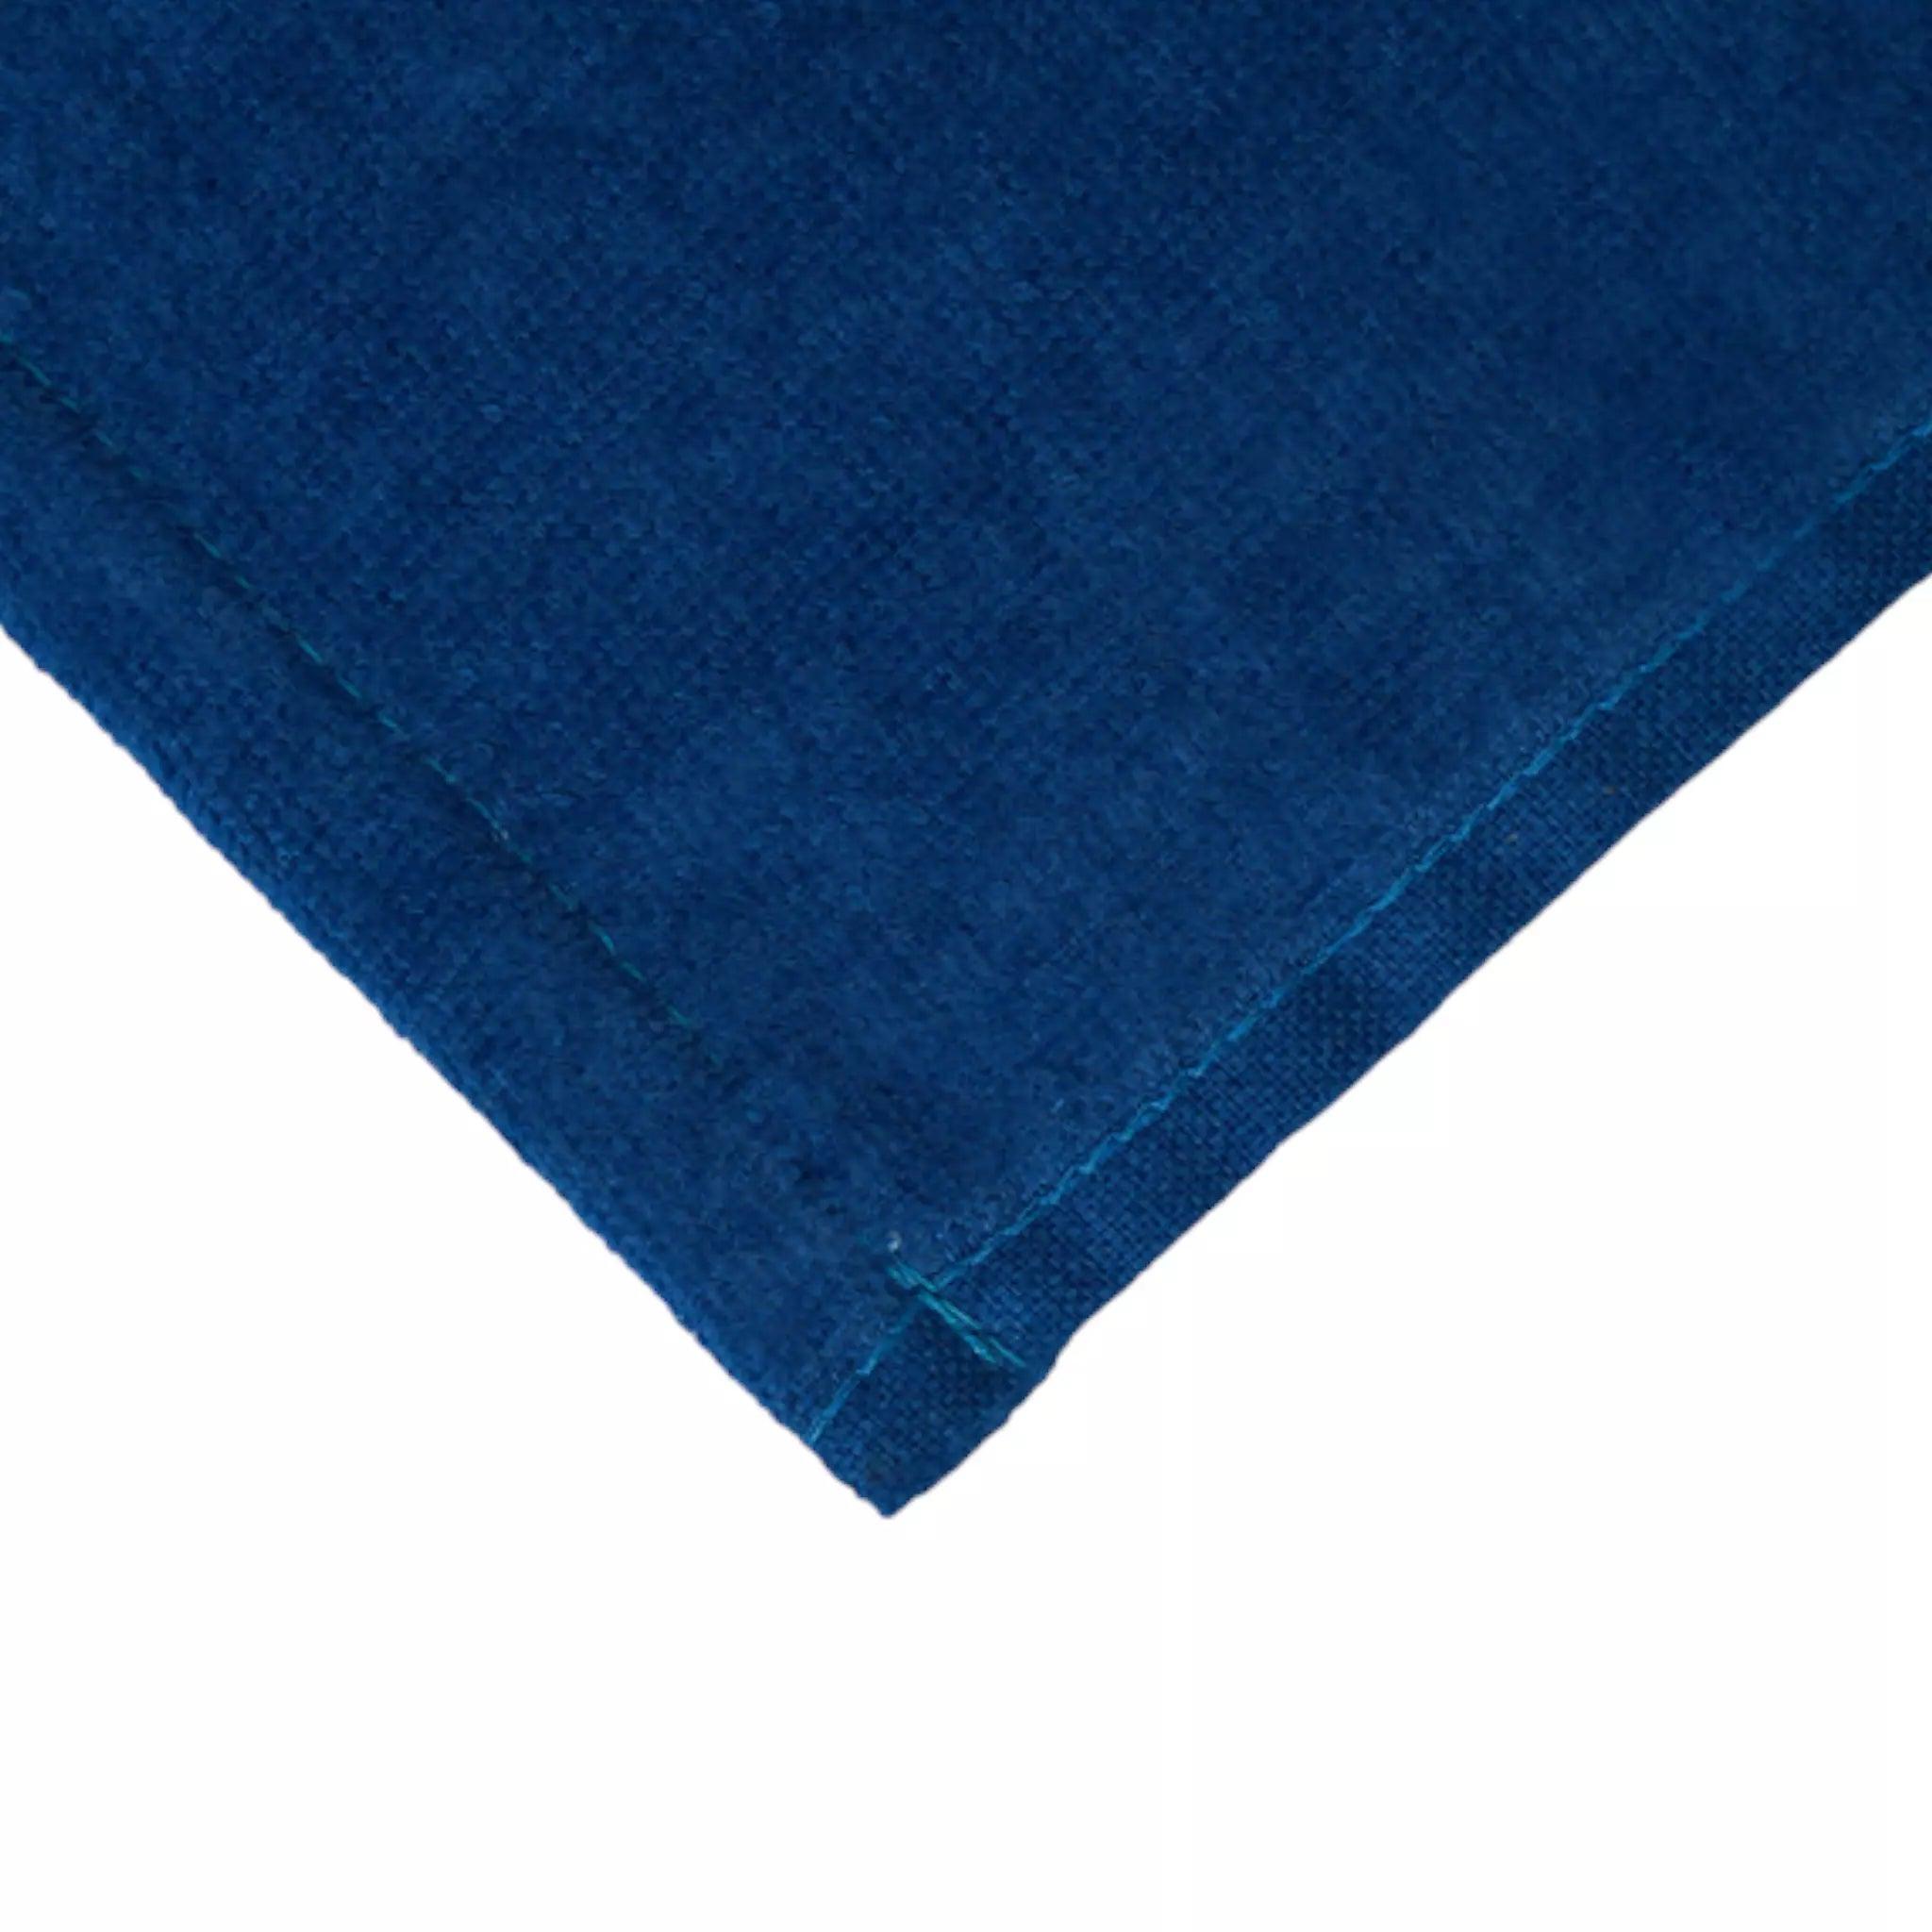 New Printed Microfabric Towel - Dash Racegear 